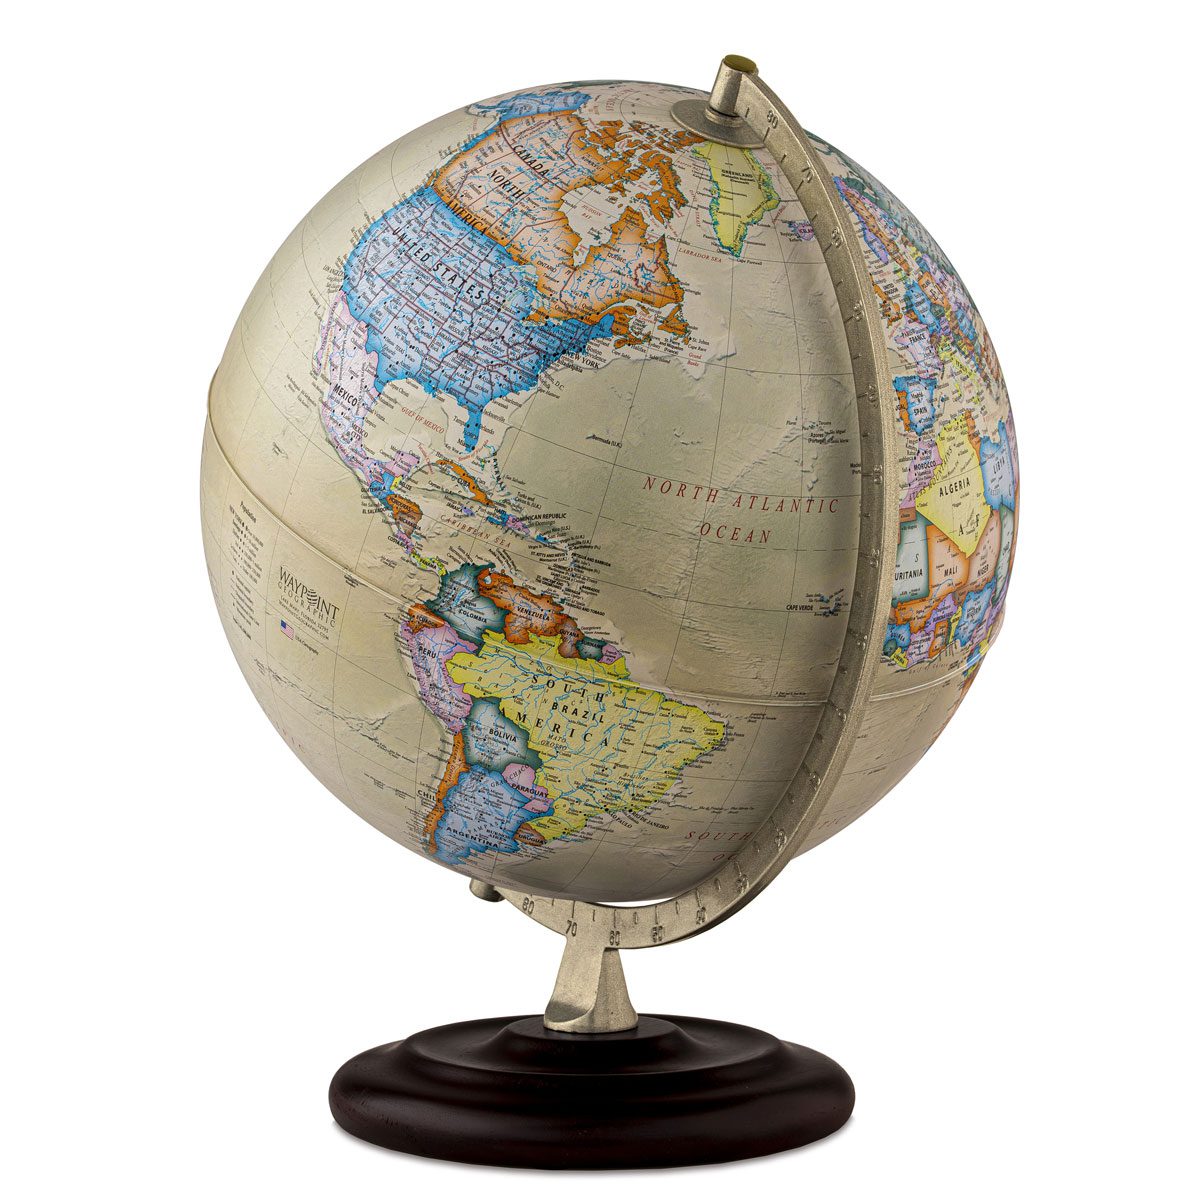 Ambassador Globe - WP11007 - Ultimate Globes